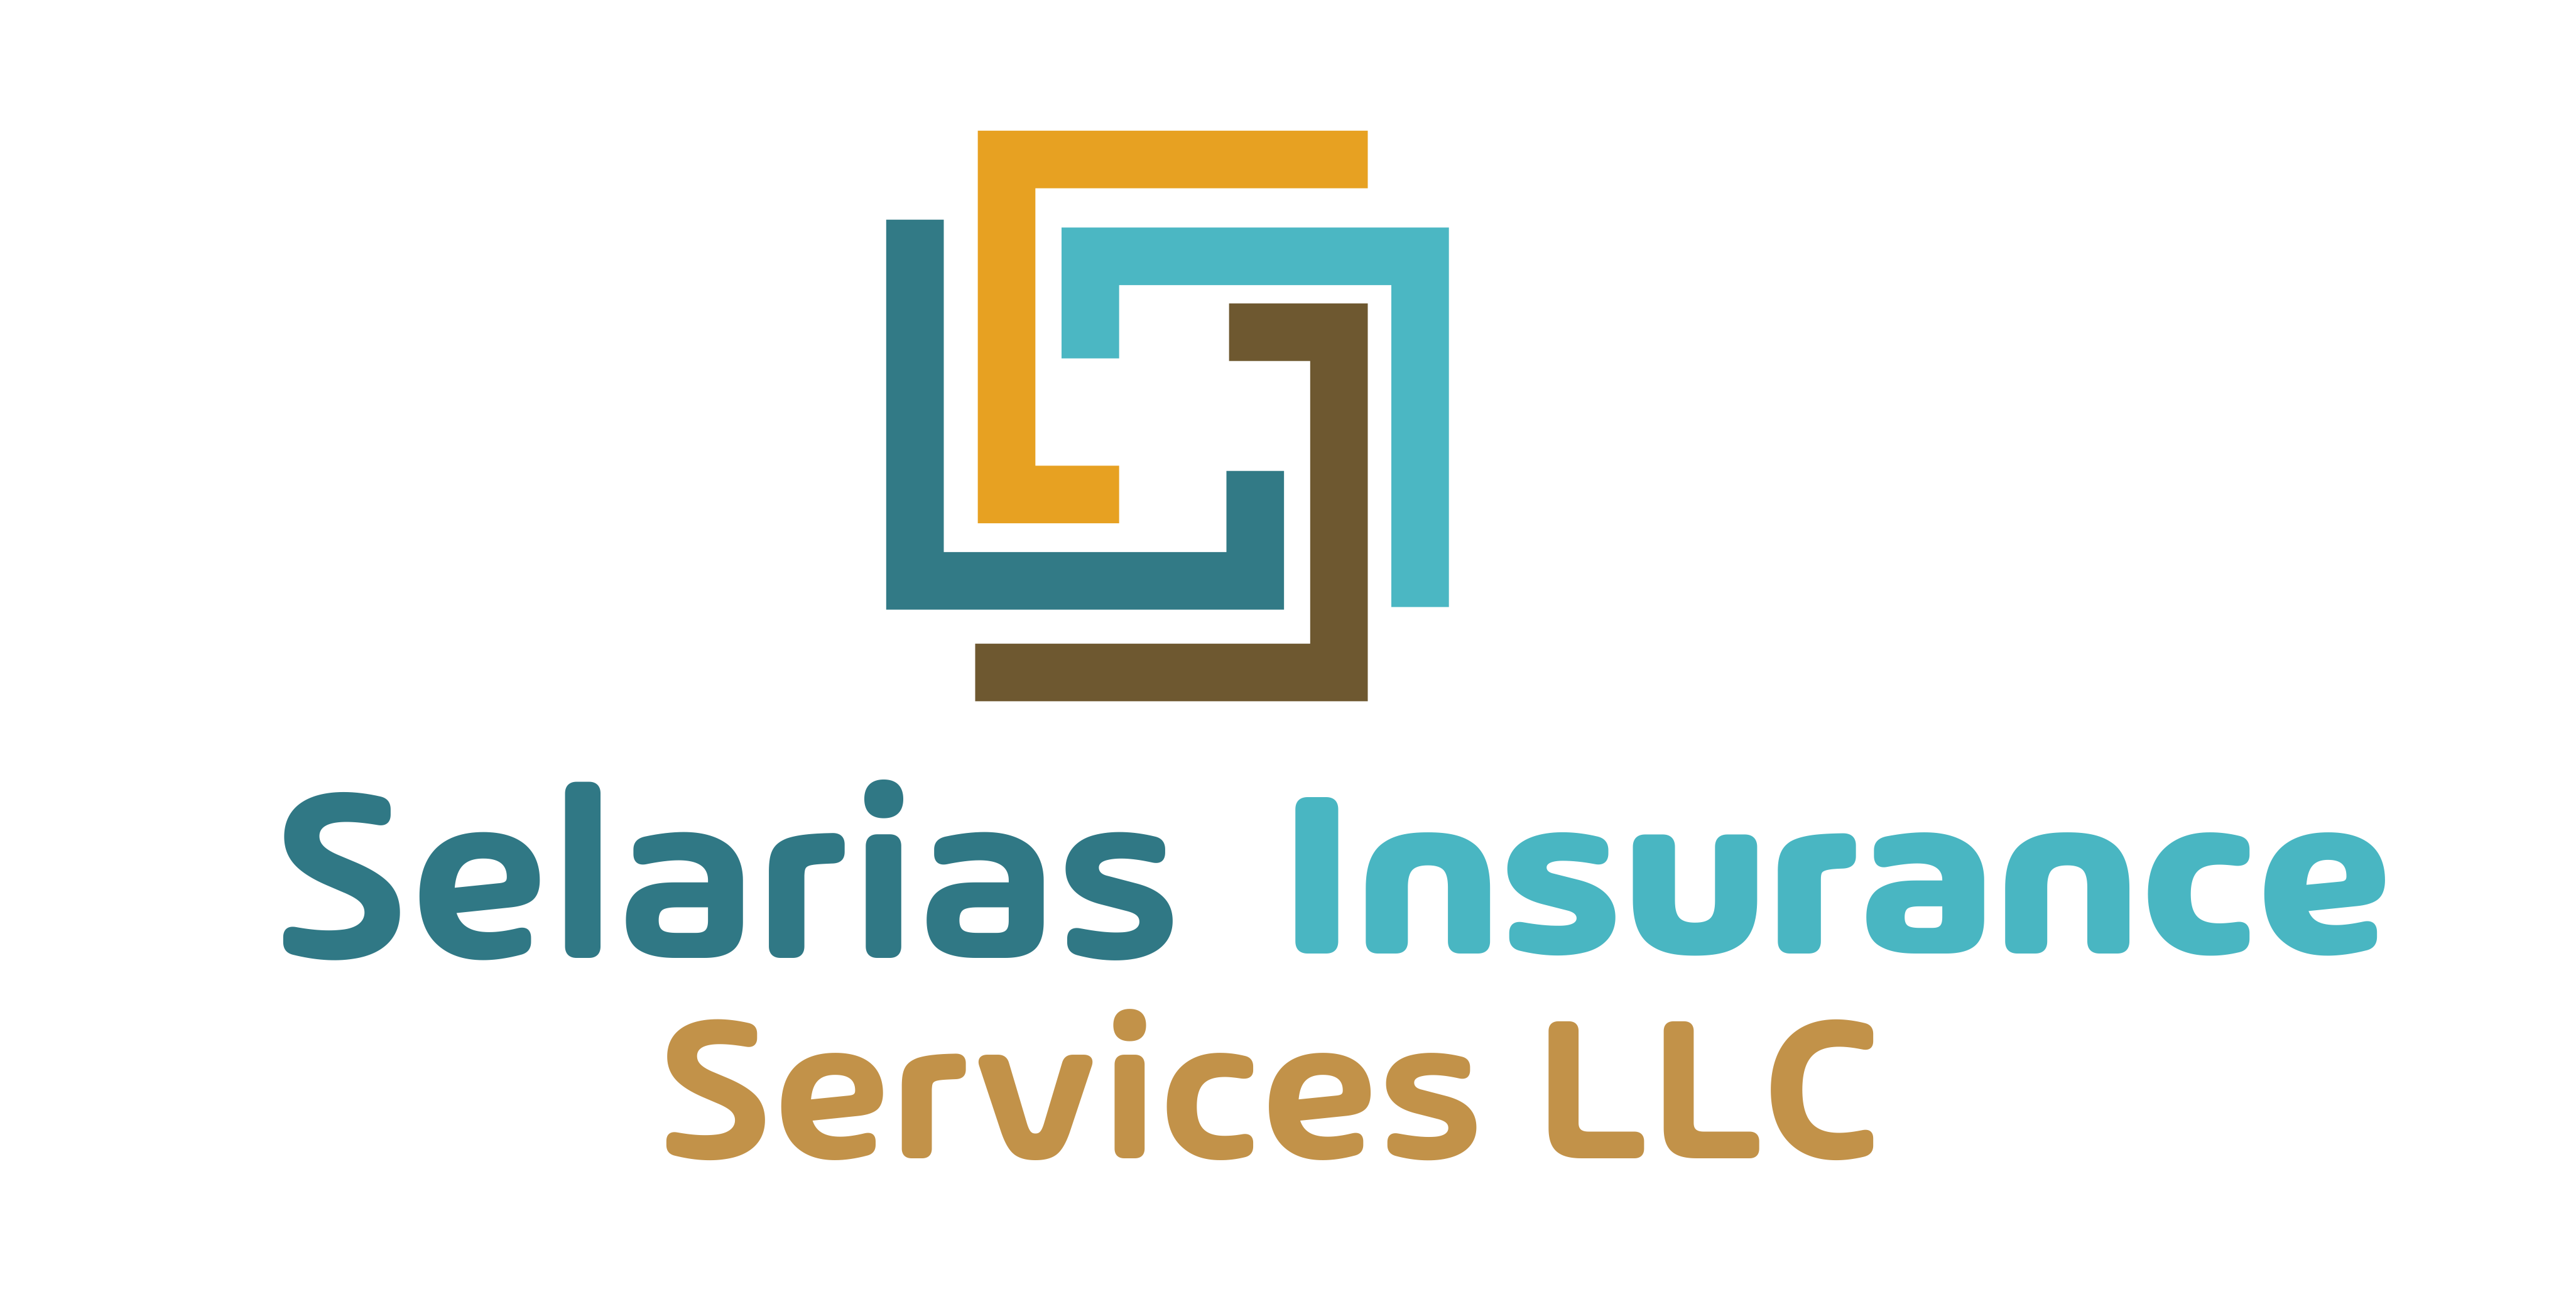 Selarias Insurance Services LLC.